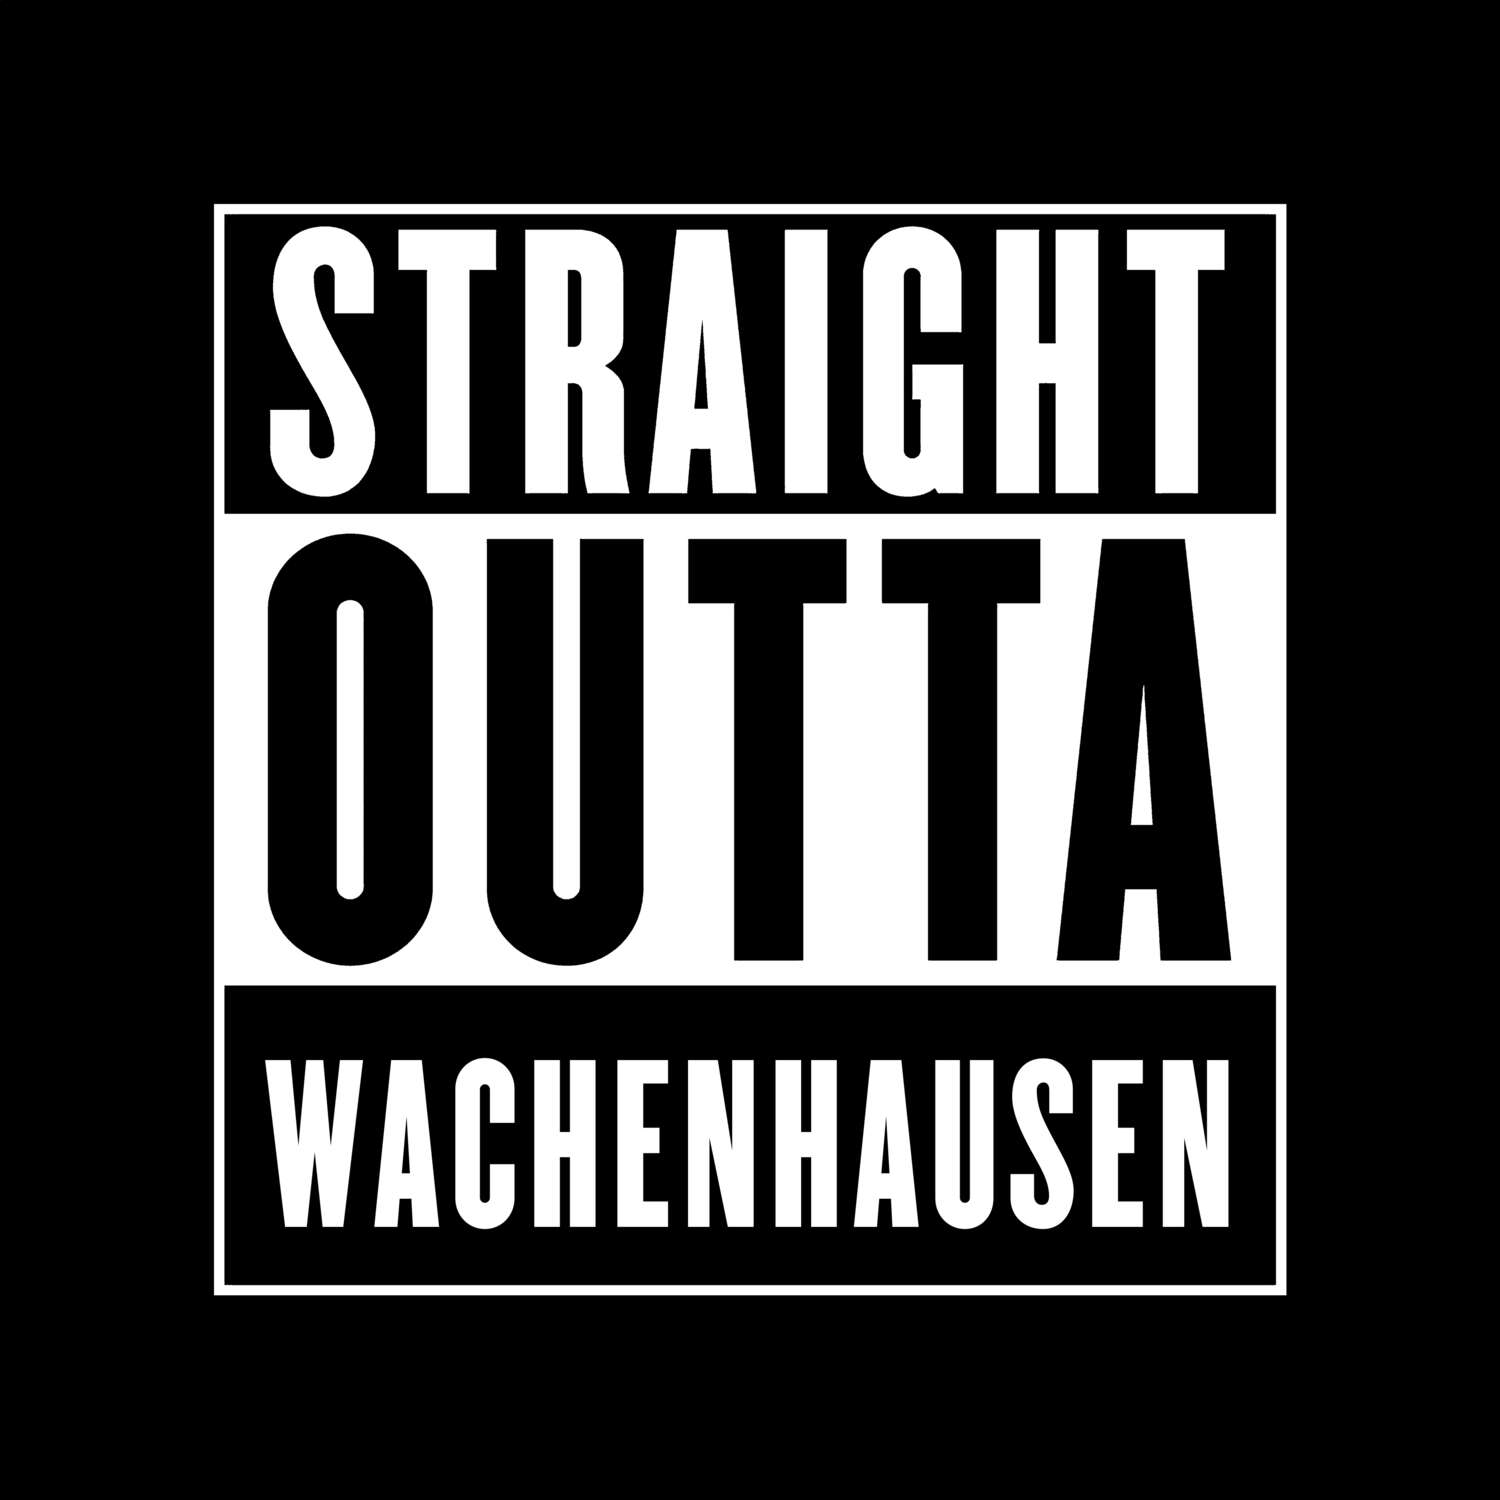 Wachenhausen T-Shirt »Straight Outta«